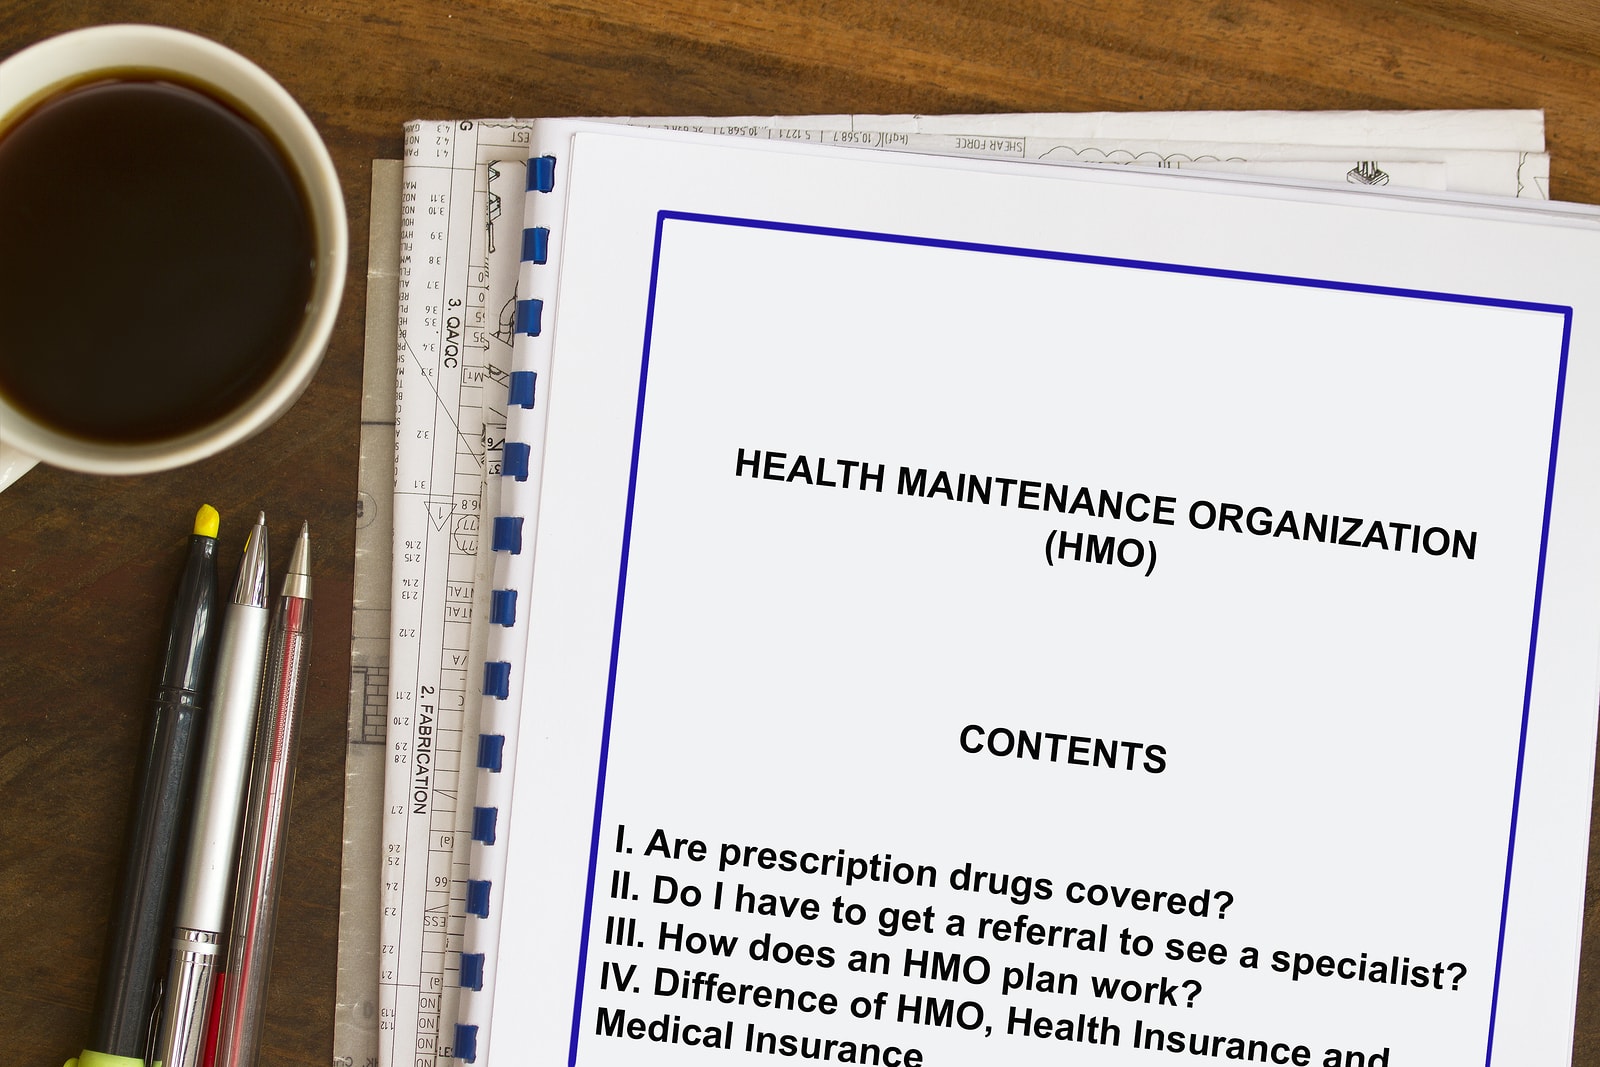 A binder with Health Maintenance Organization (HMO) information rests on a desk.